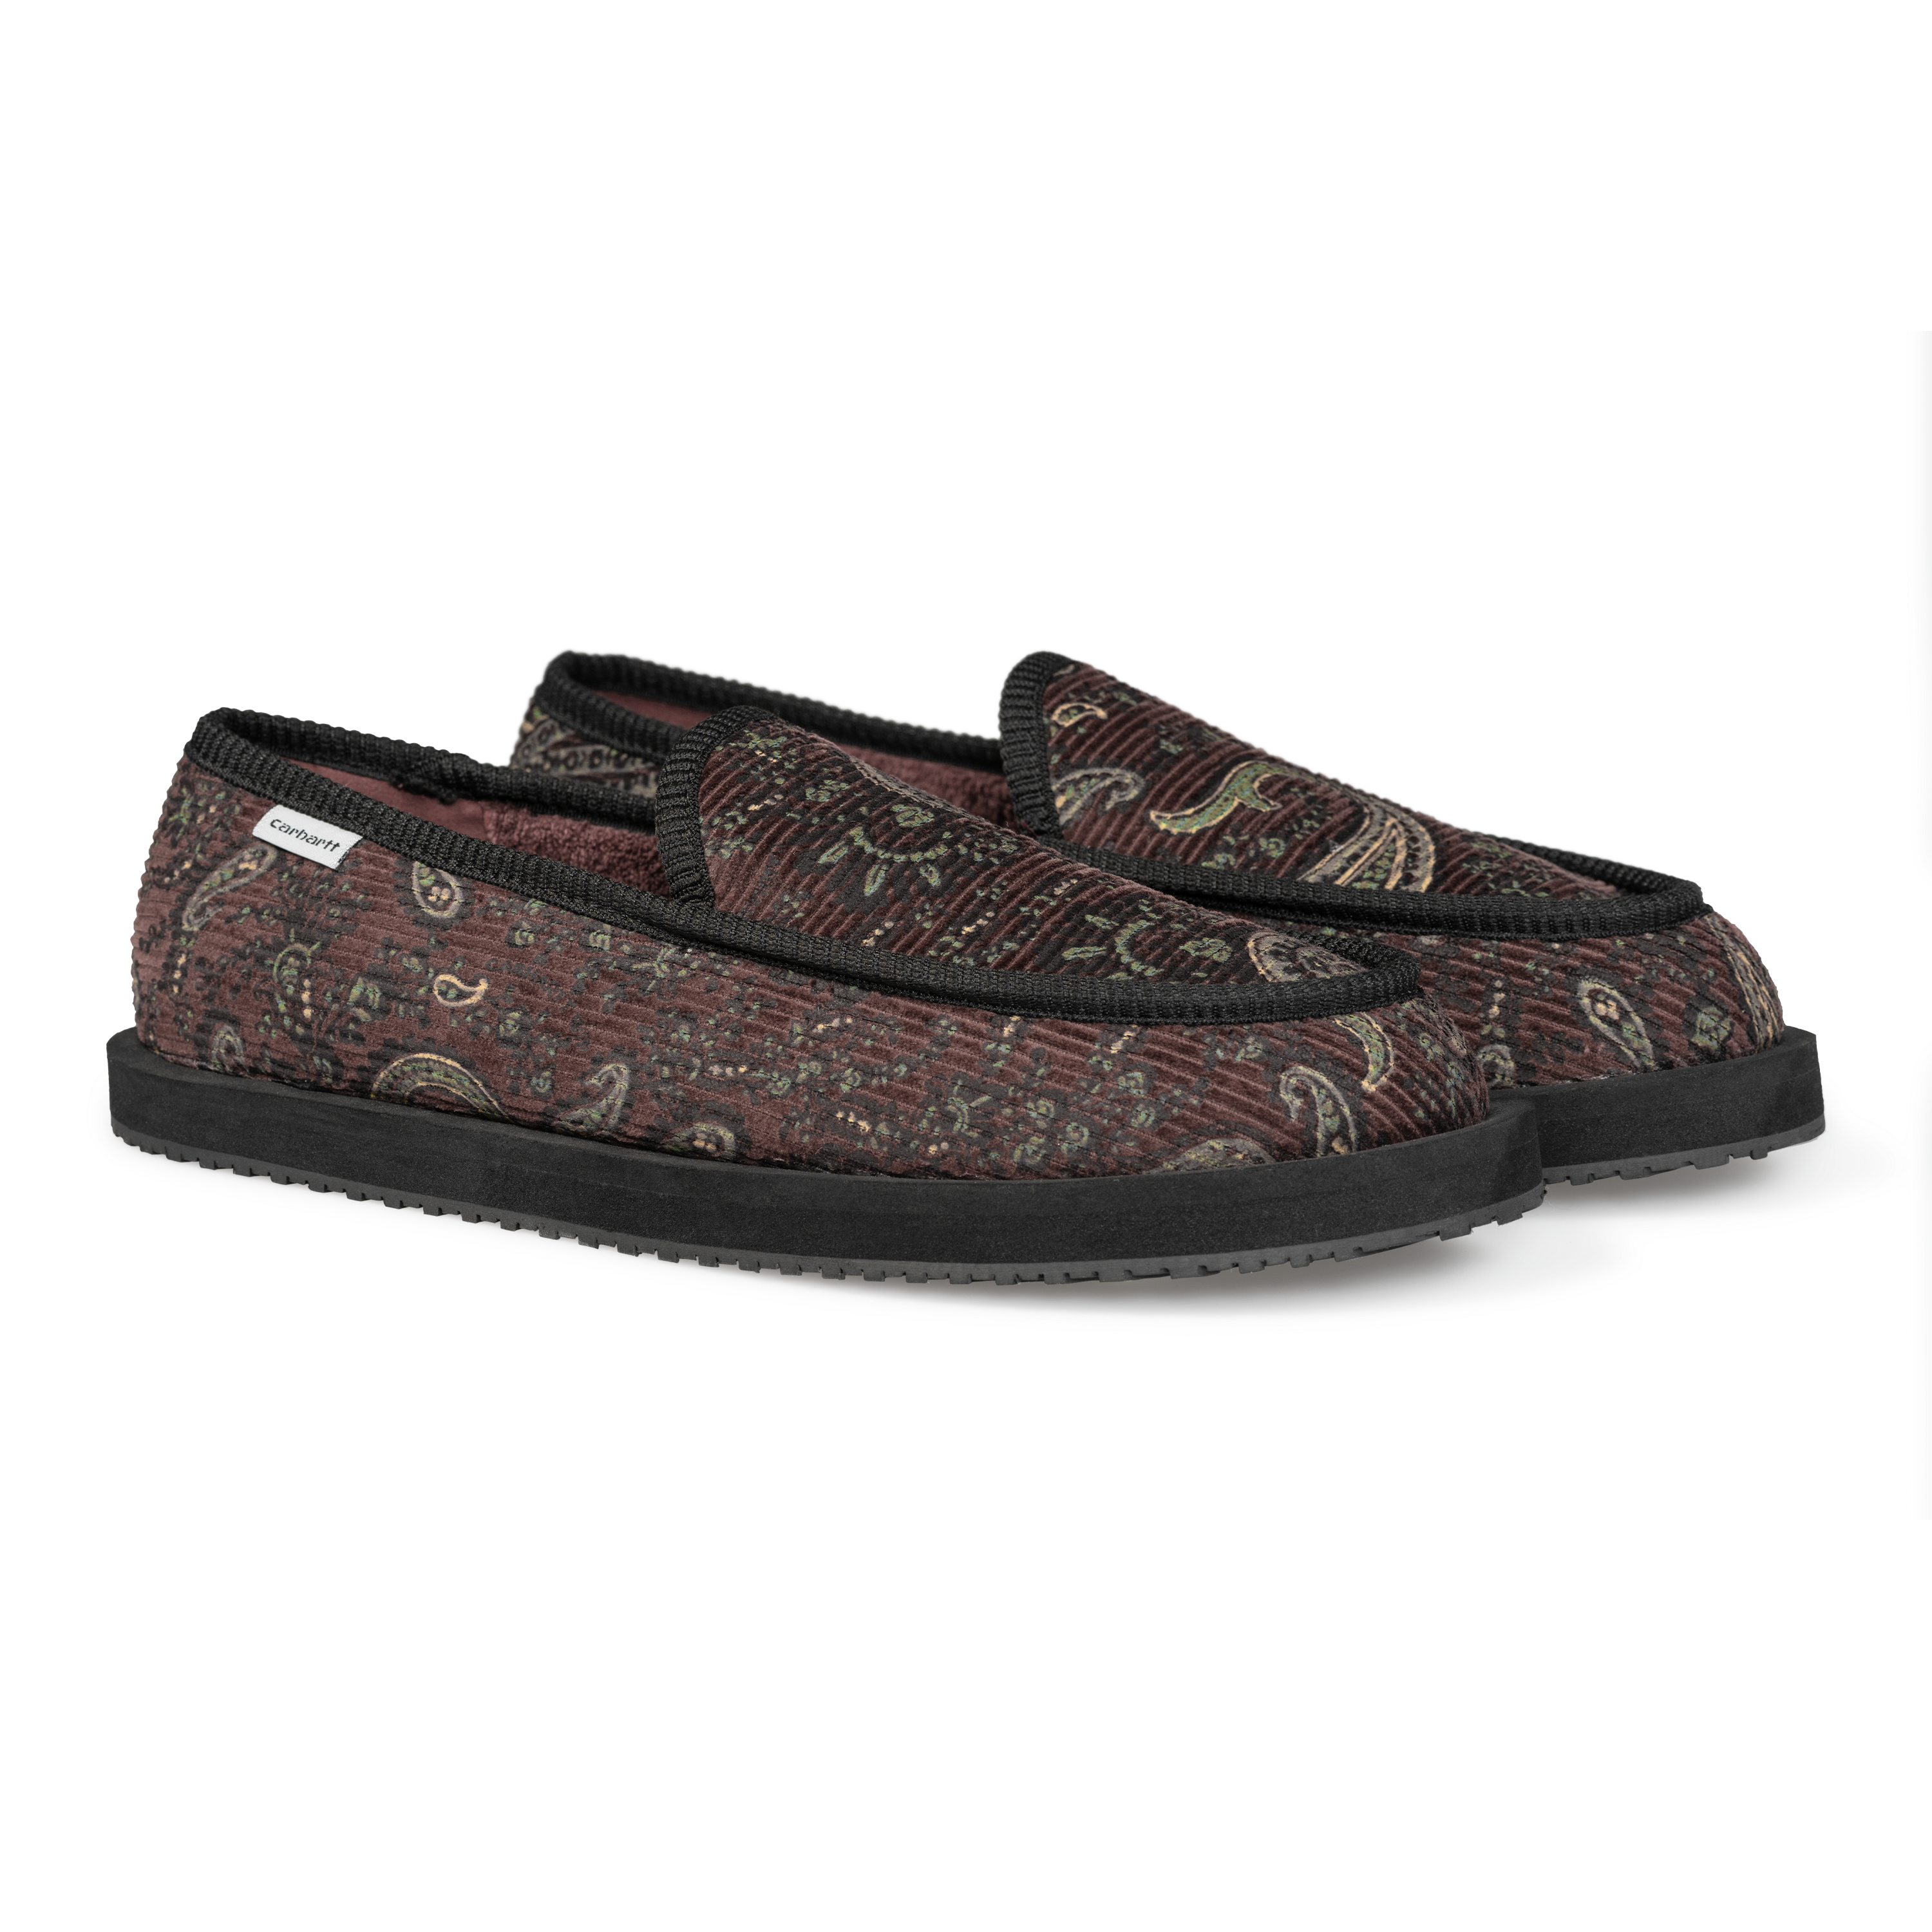 Louis Vuitton Rare Collectors Material Zapatillas Zapatos Trainers